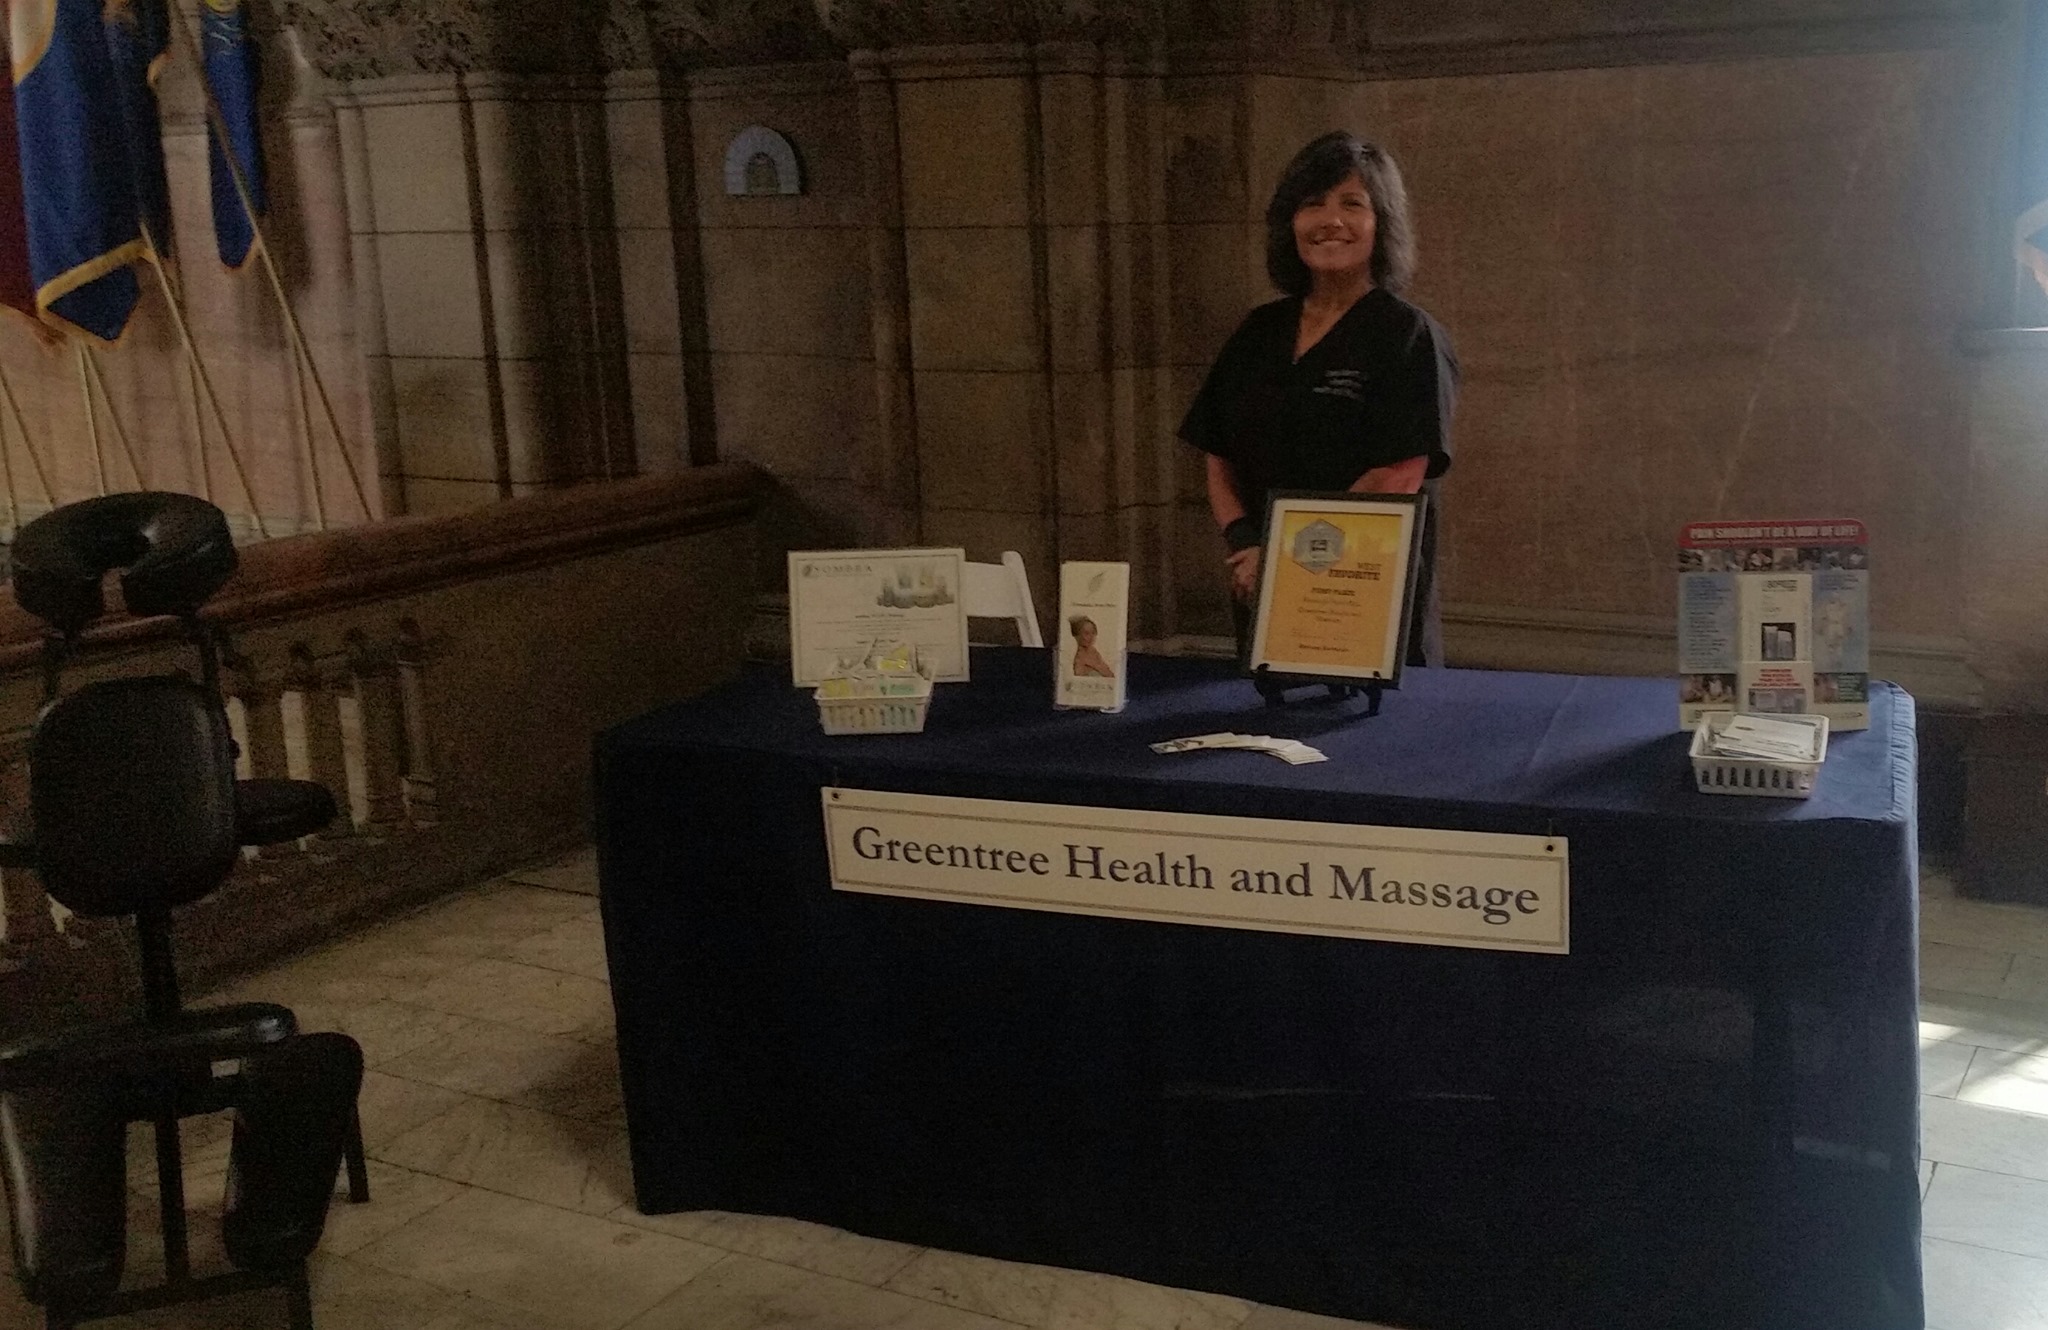 Greentree Health and Massage